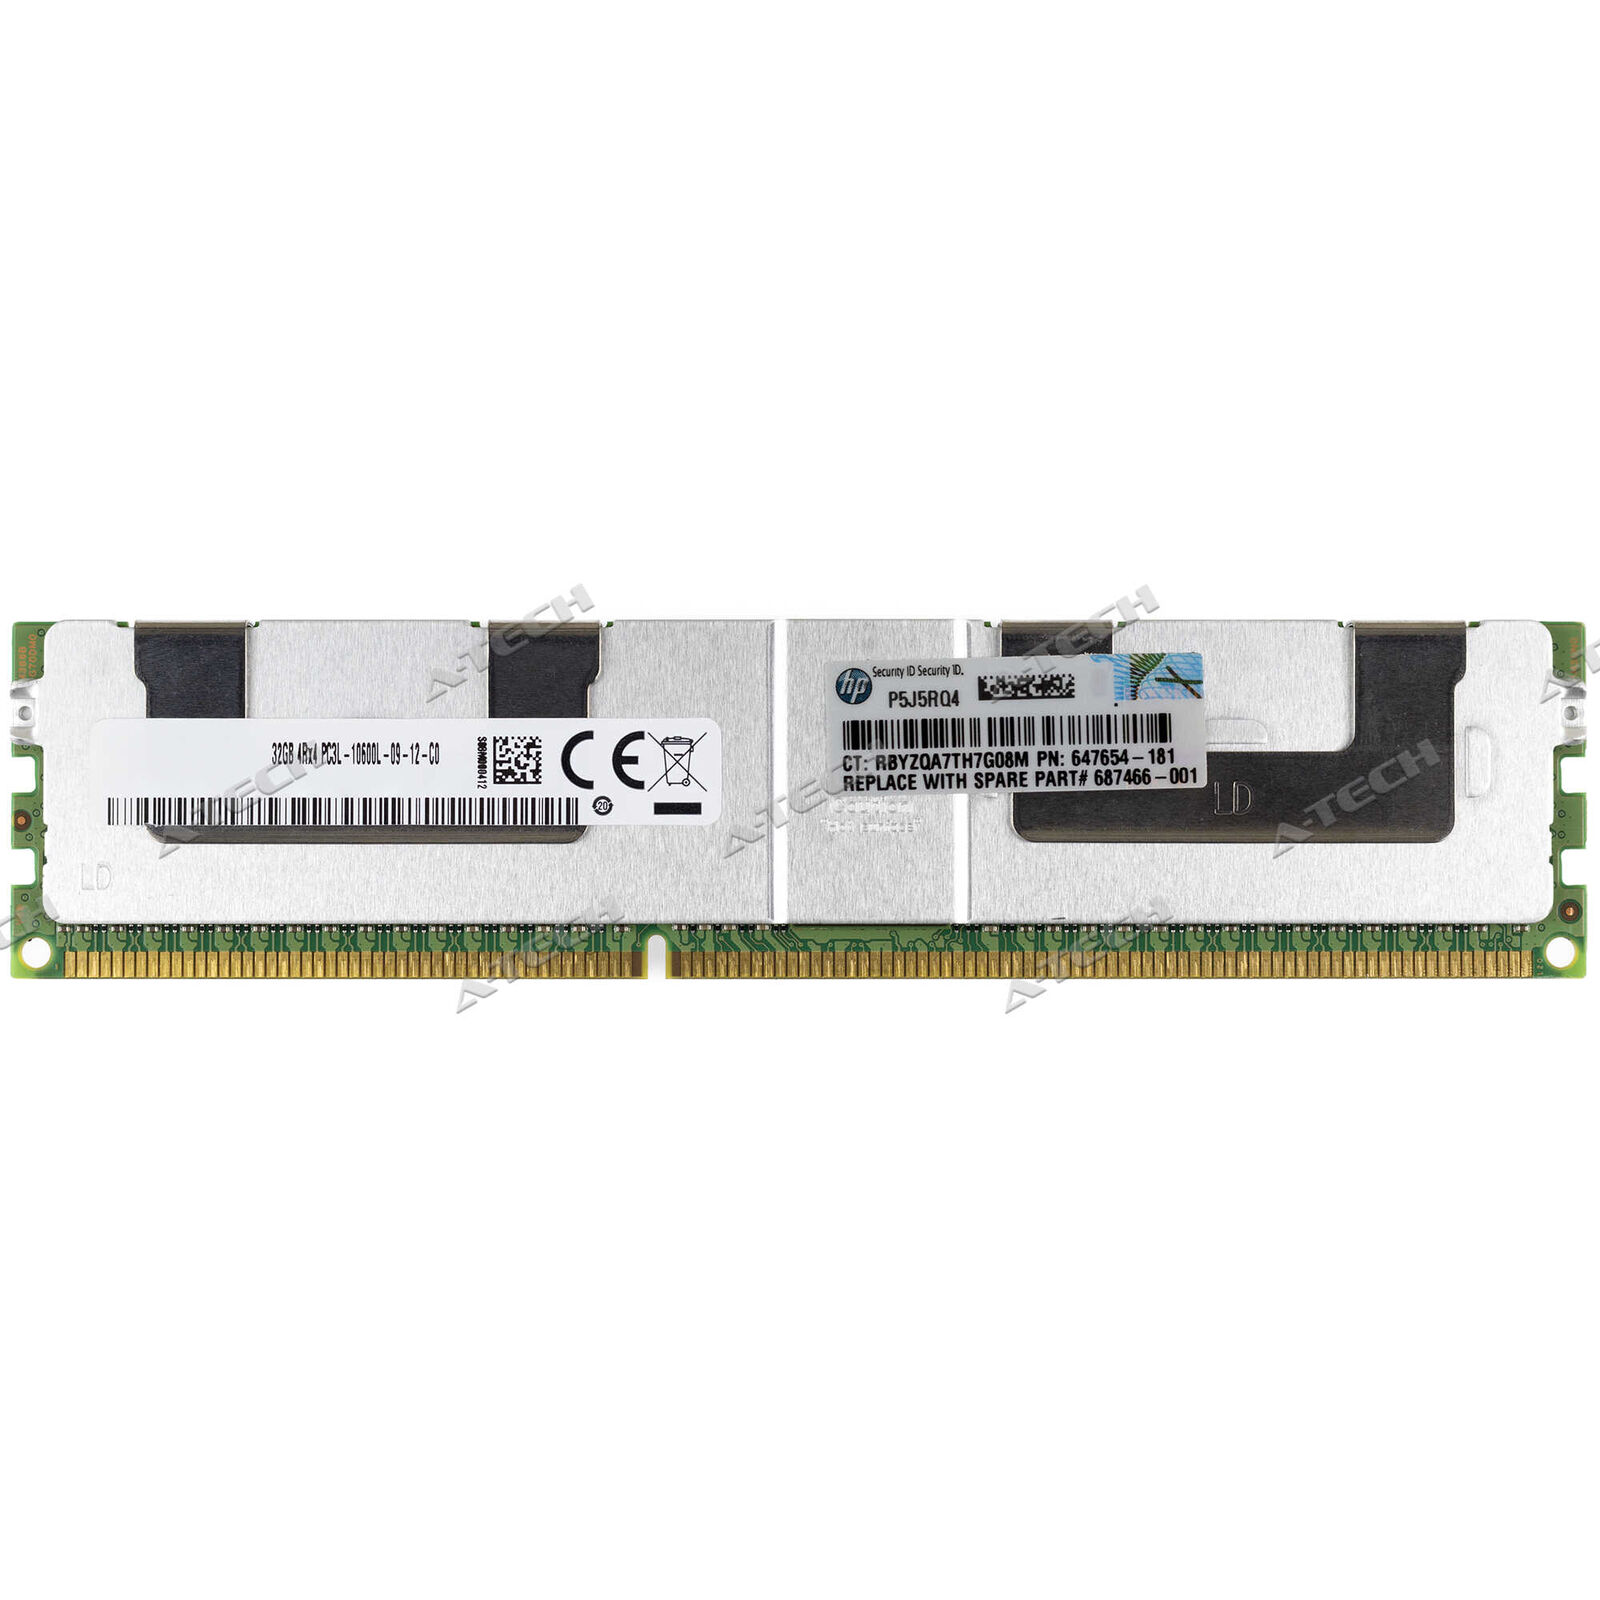 HP 32GB PC3-10600L LRDIMM 647885-B21 687466-001 647654-181 HPE Server Memory RAM